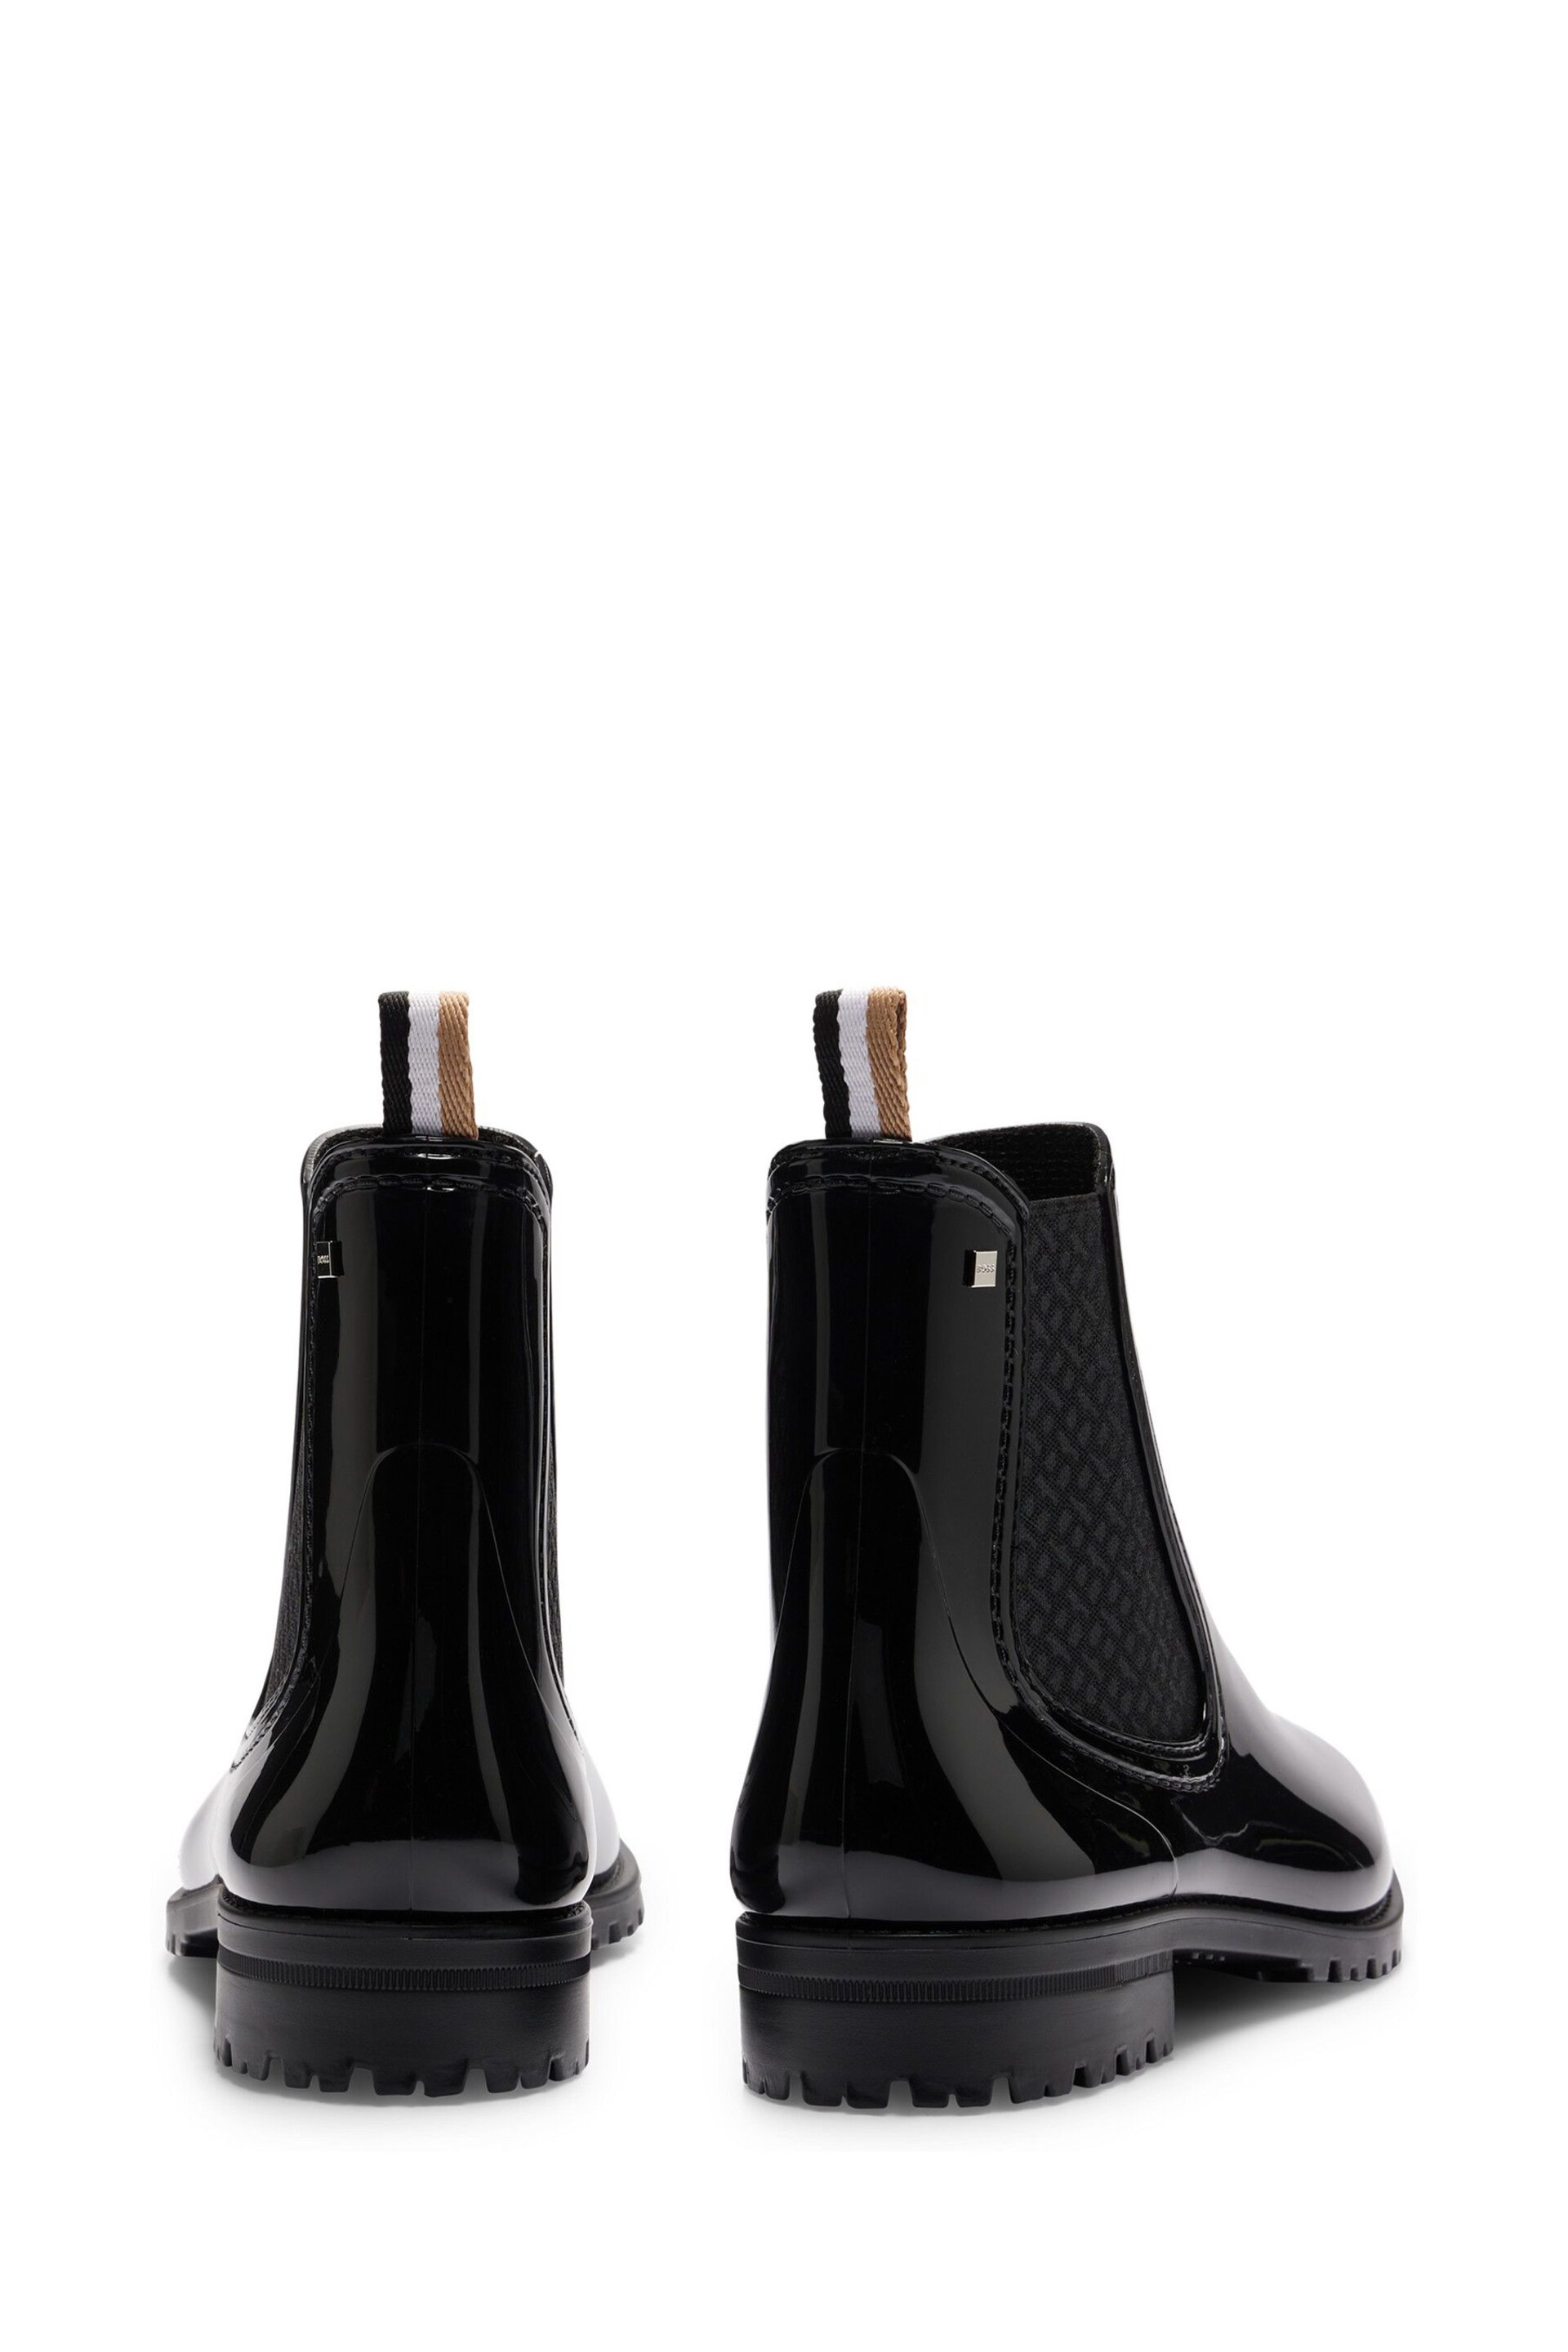 BOSS Black Chelsea Short Wellington Boots - Image 3 of 4